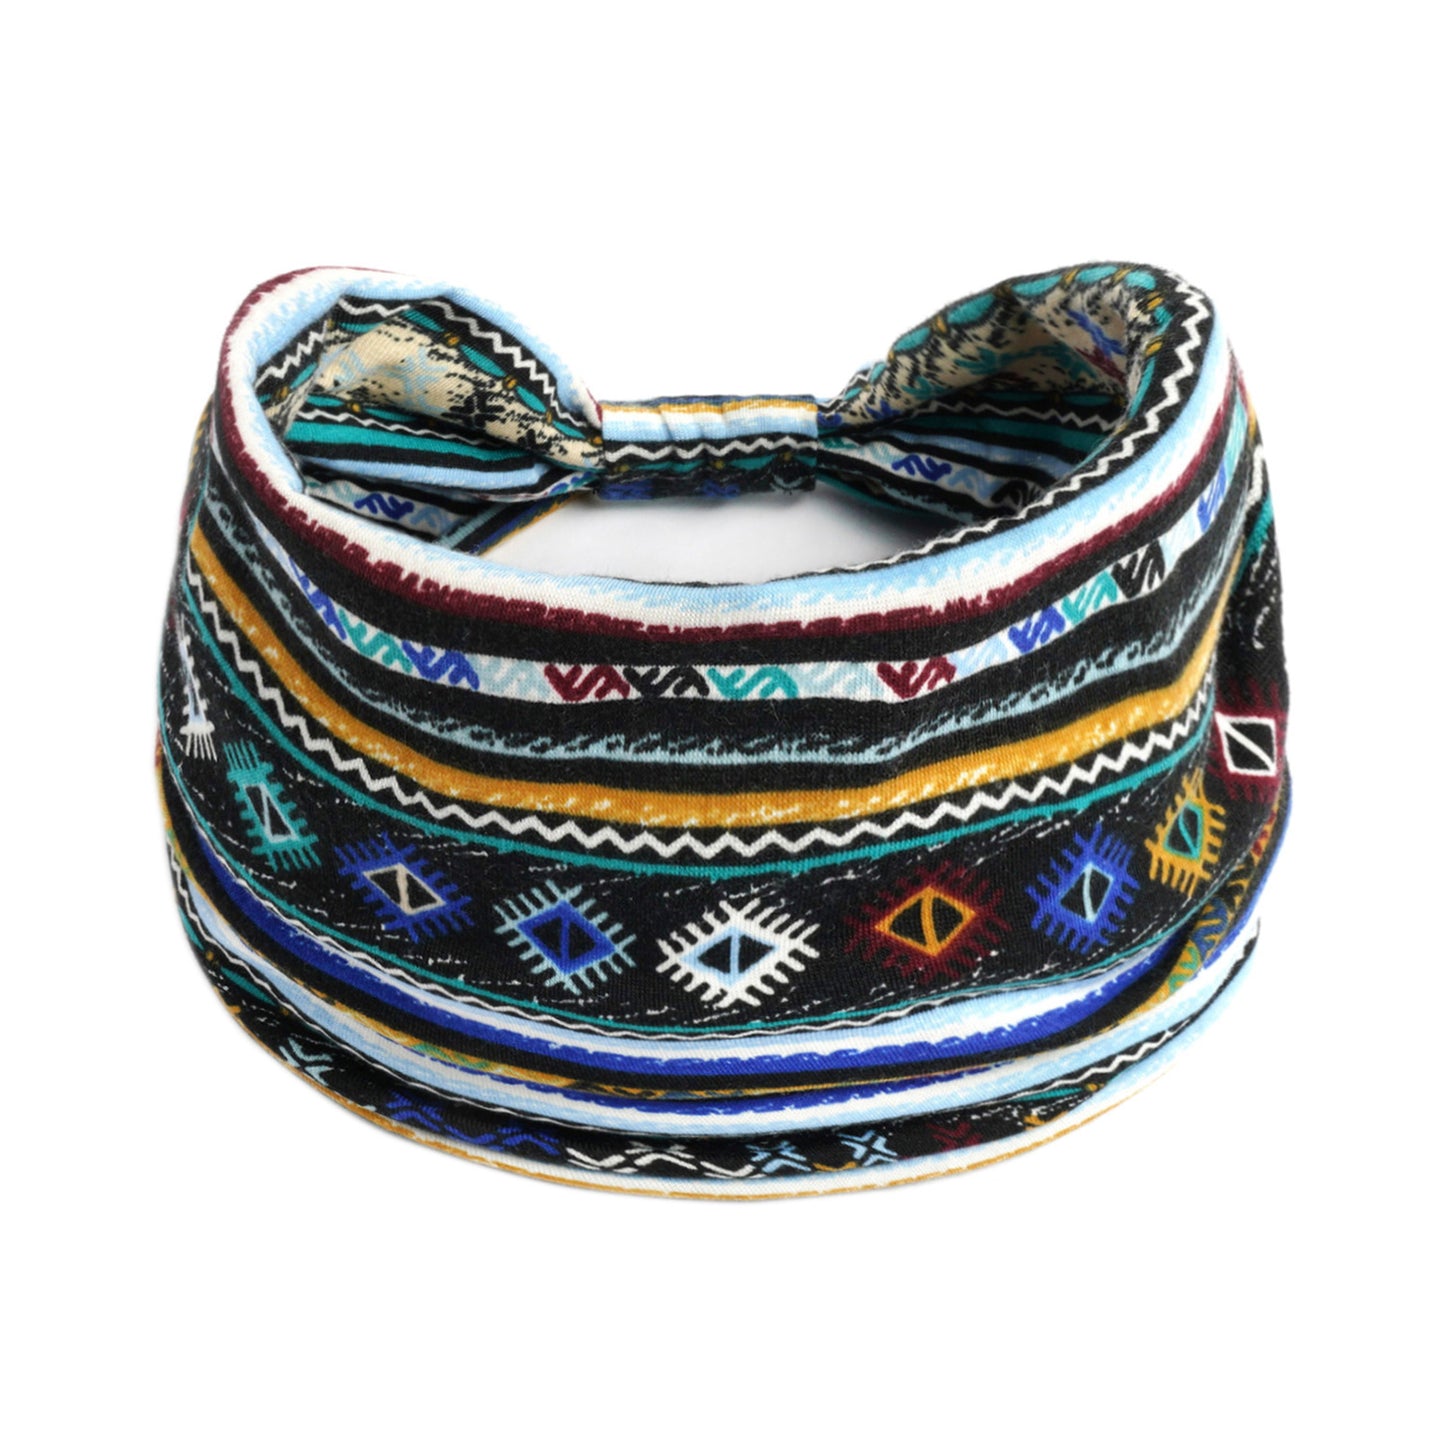 Ethnic style multicoloured 2-way bandanna hair band